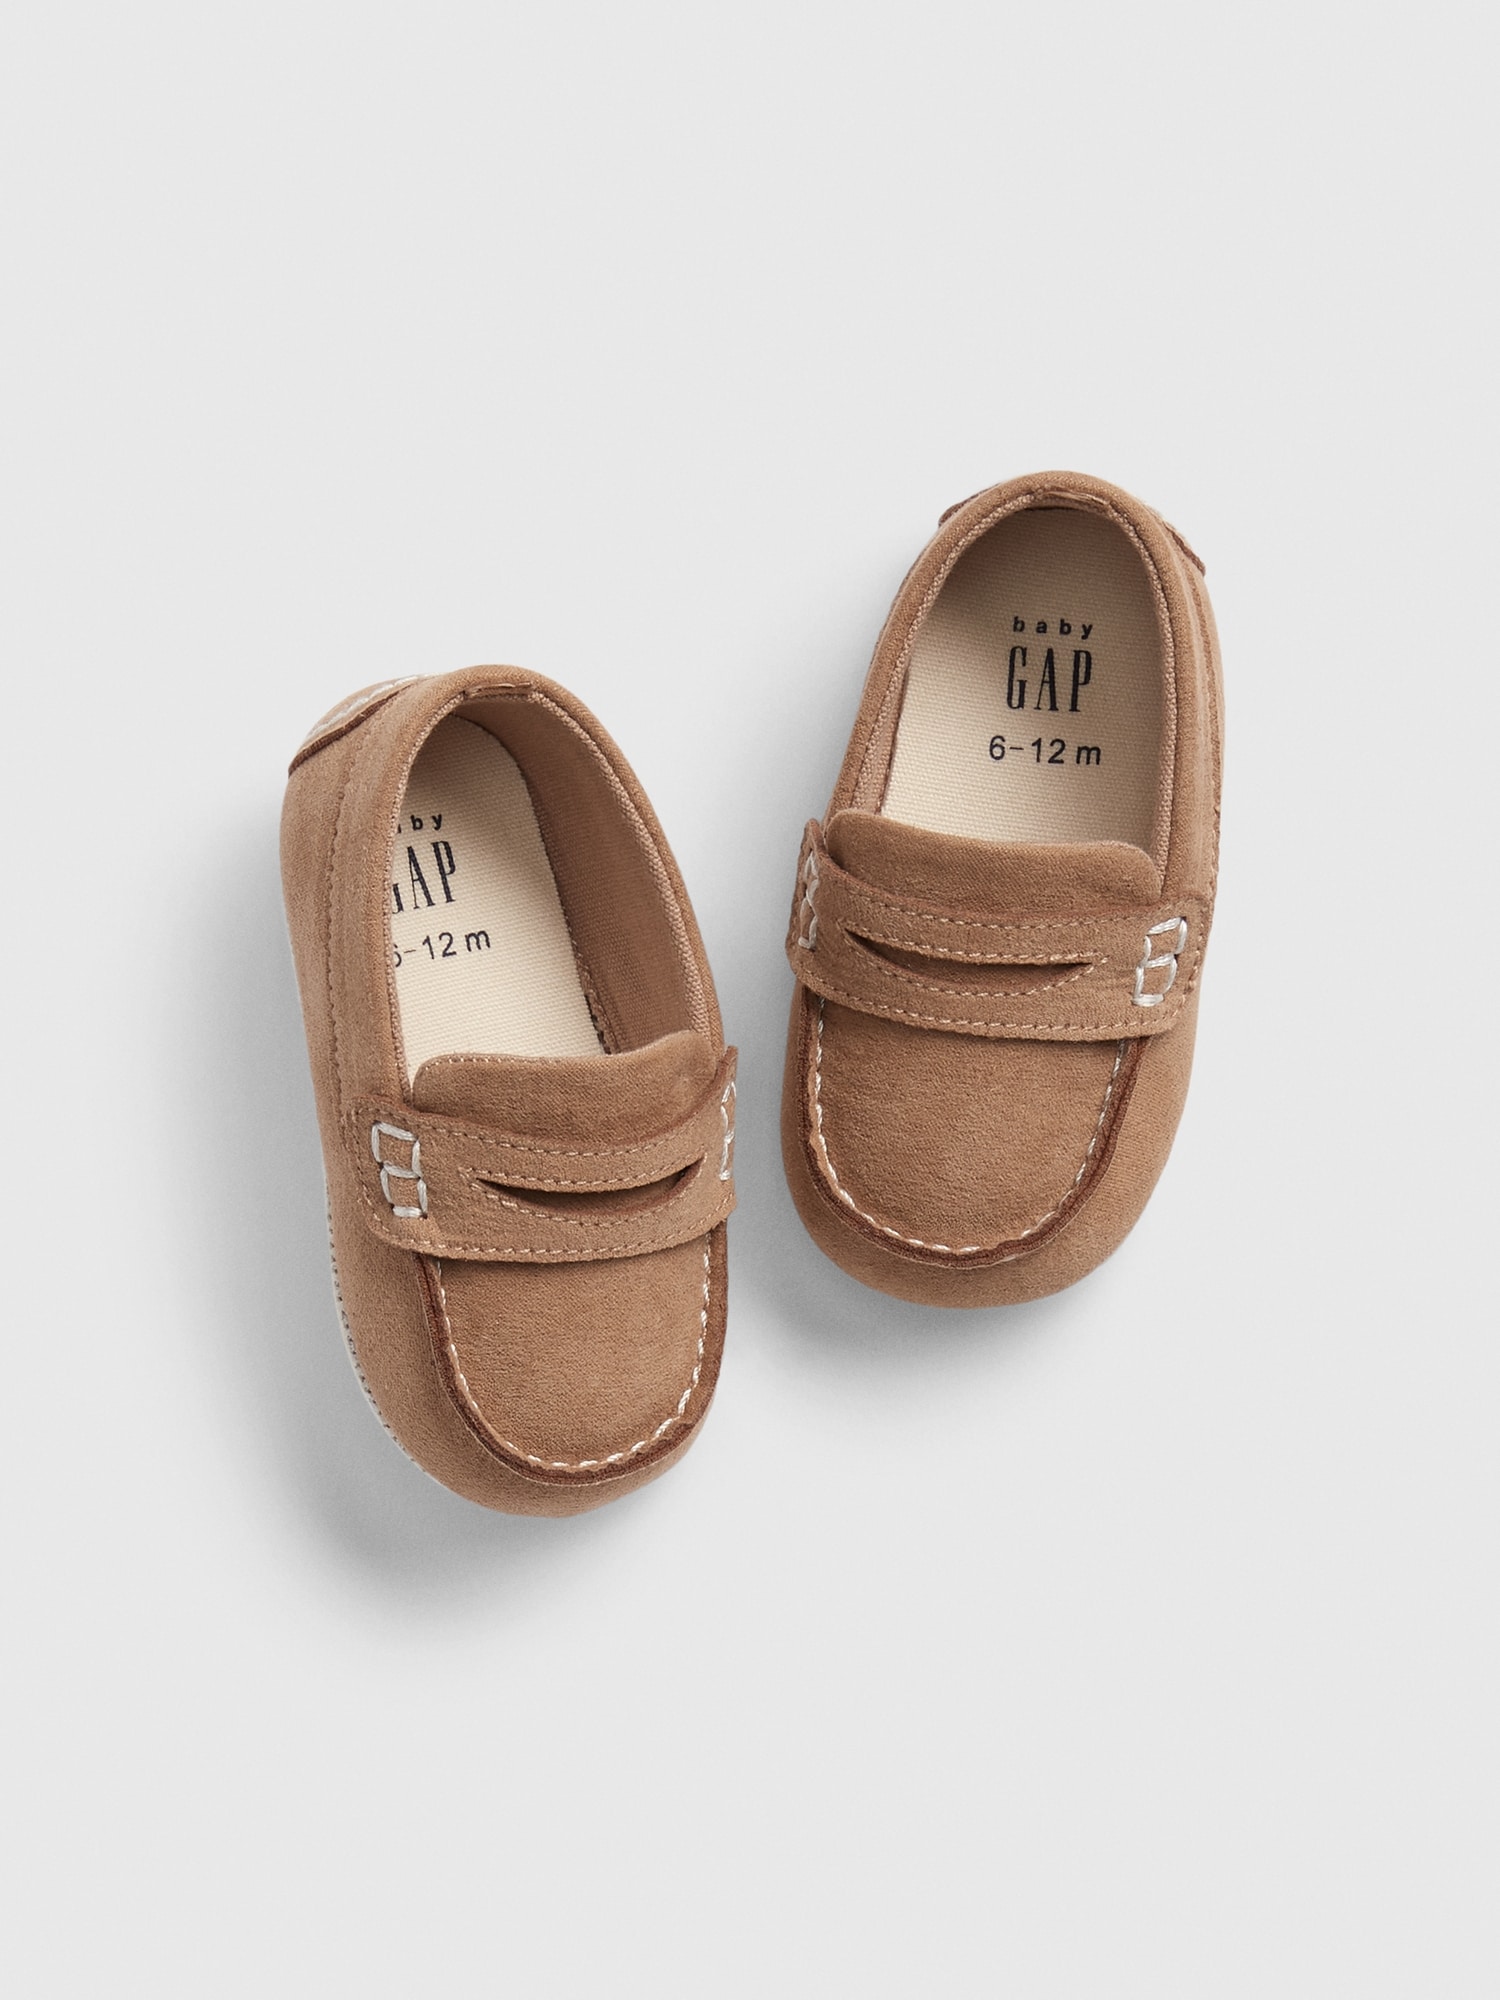 GAP Baby/Toddler Boy Neuf avec étiquettes taille 5 marron clair/marron Toile Hi-top Baskets Chaussures Bottes 